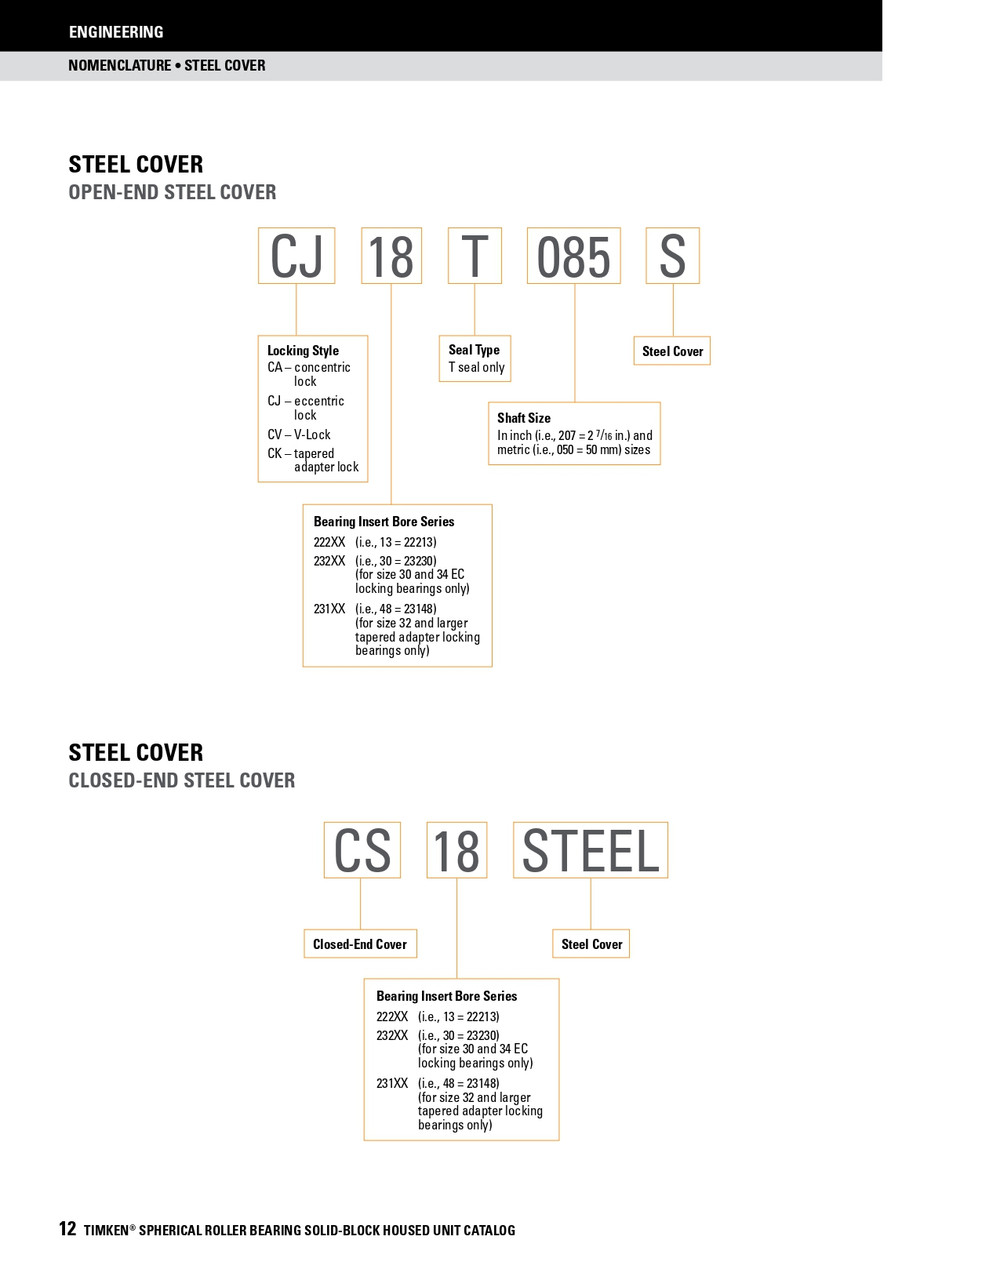 100mm Timken SRB Steel Open End Cover w/Teflon Seal - QV V-Lock® Type   CV22T100S